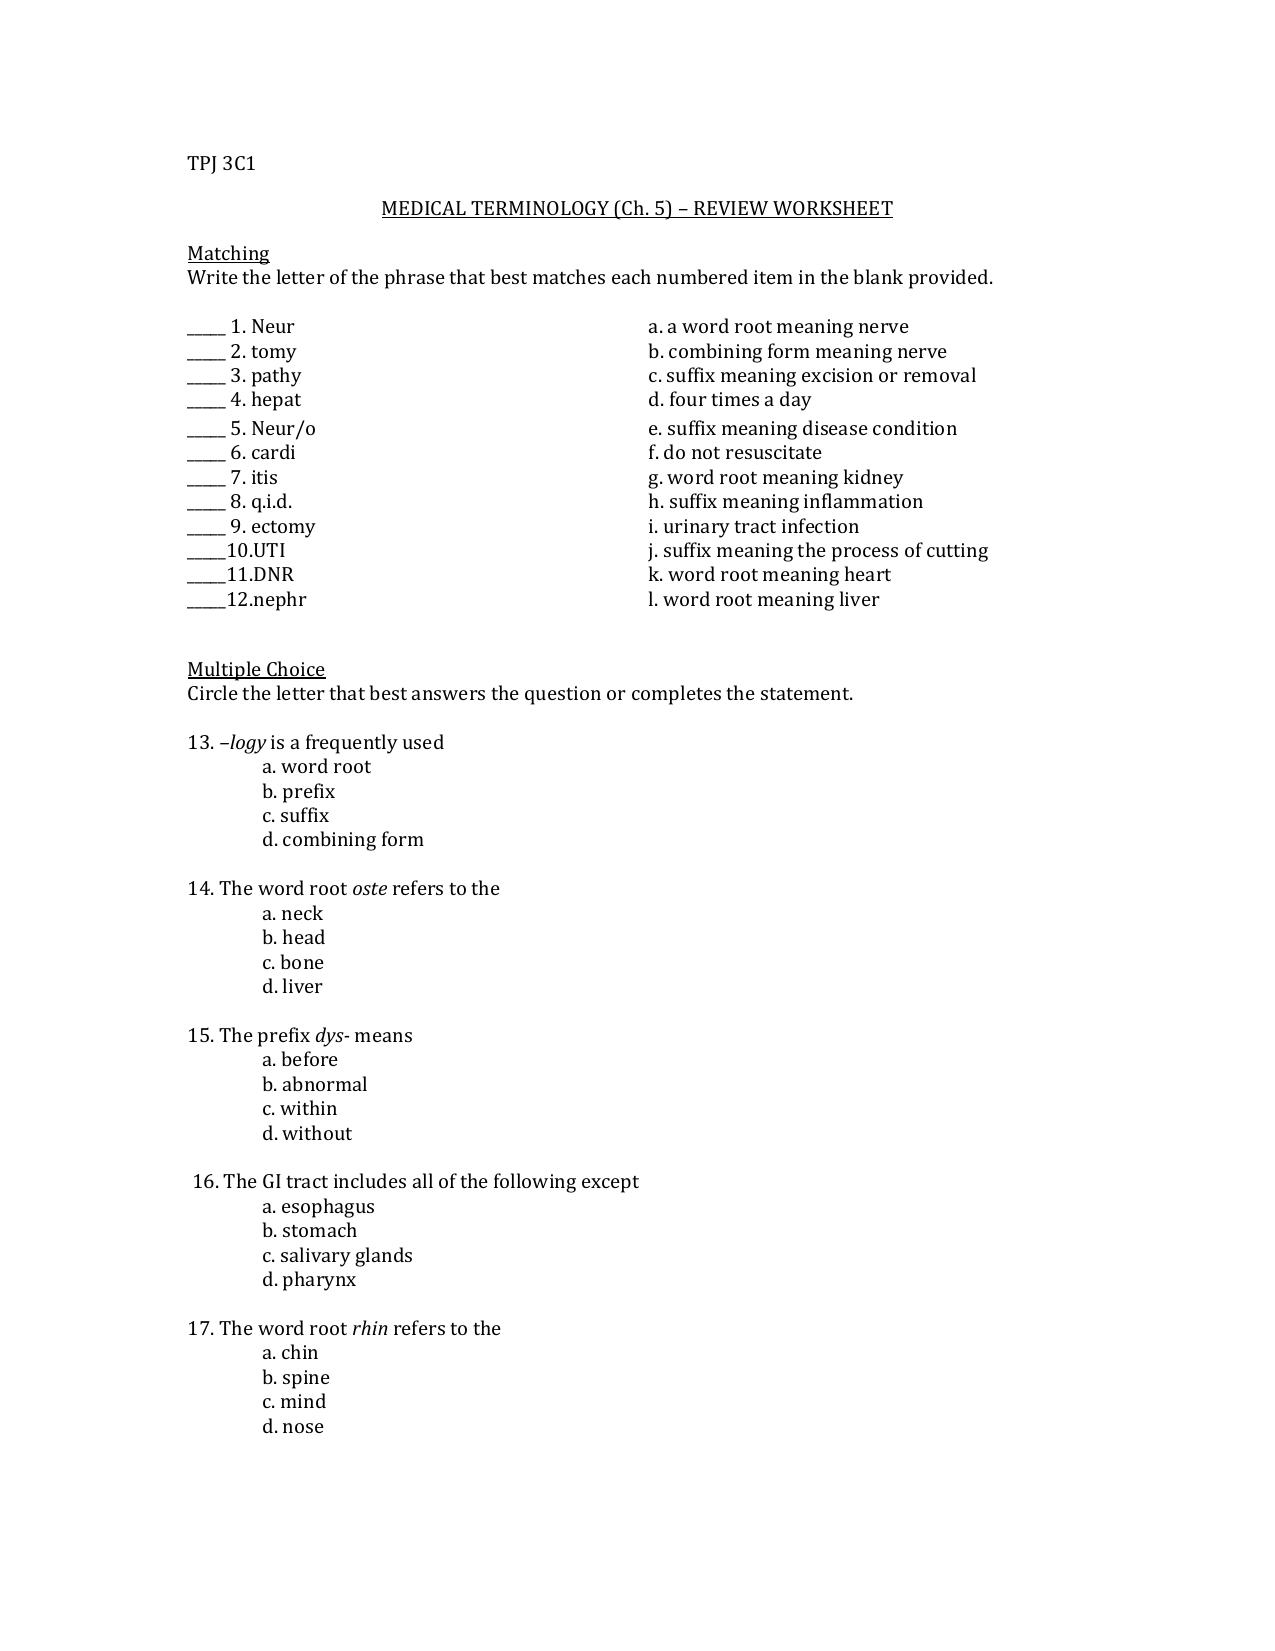 TPJ 20C20 Chapter 20 Review Worksheet Regarding Medical Terminology Suffixes Worksheet